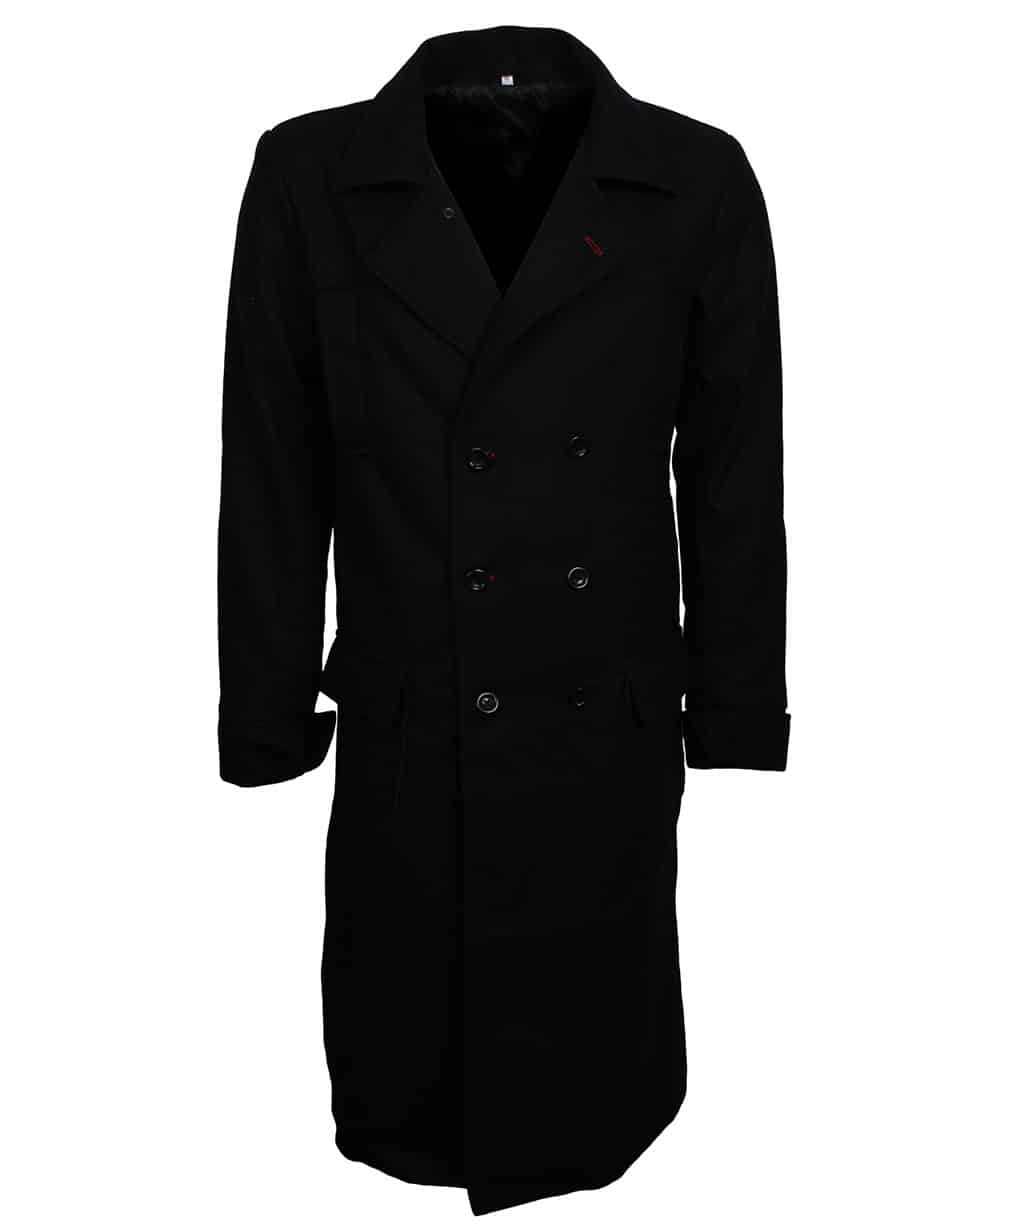 sherlock-holmes-wool-black-trench-coat-sale